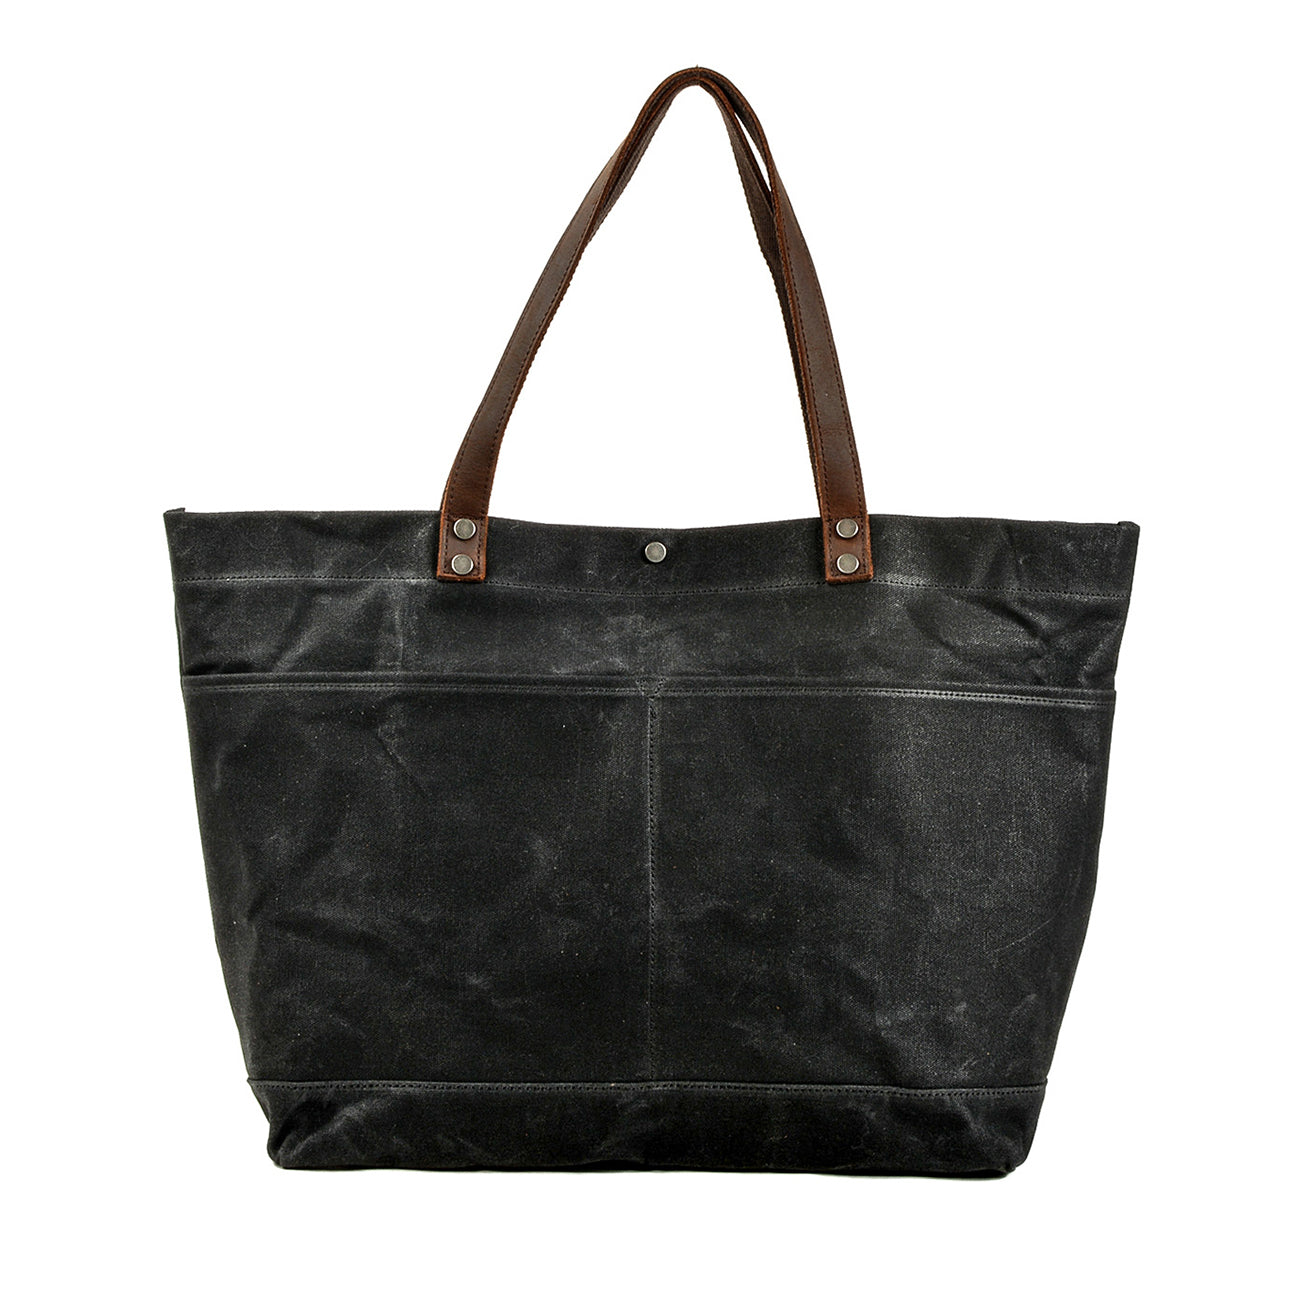 Chic Black Bag - Vegan Leather Bag - Tote Bag - Purse - Lulus